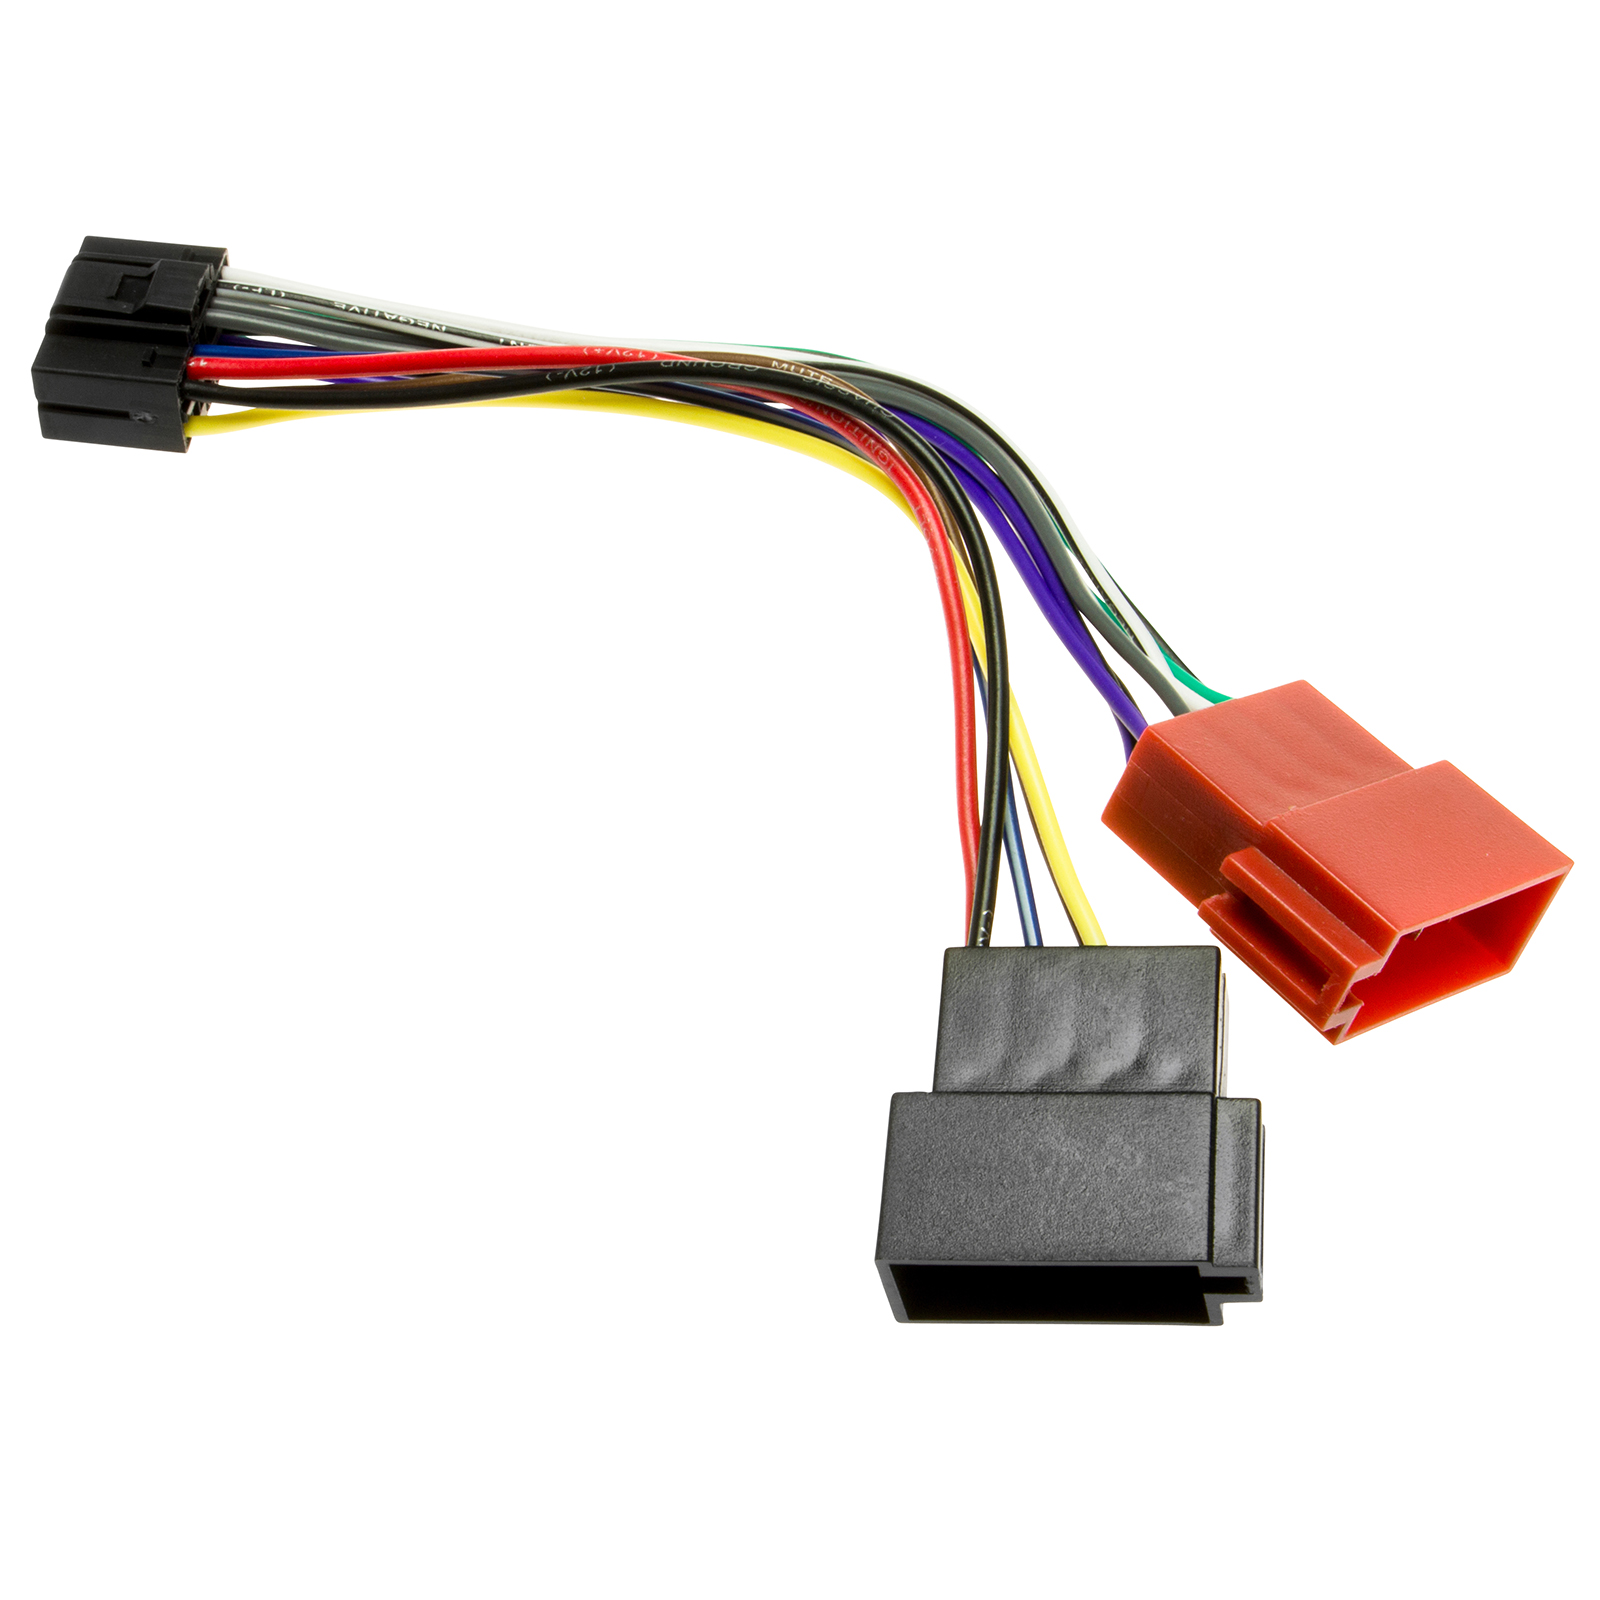 https://www.eu-bay.de/media/image/4d/0a/39/adapter-universe-kenwood-auto-radio-adapter-kabel-16-pin-stecker-226126.jpg